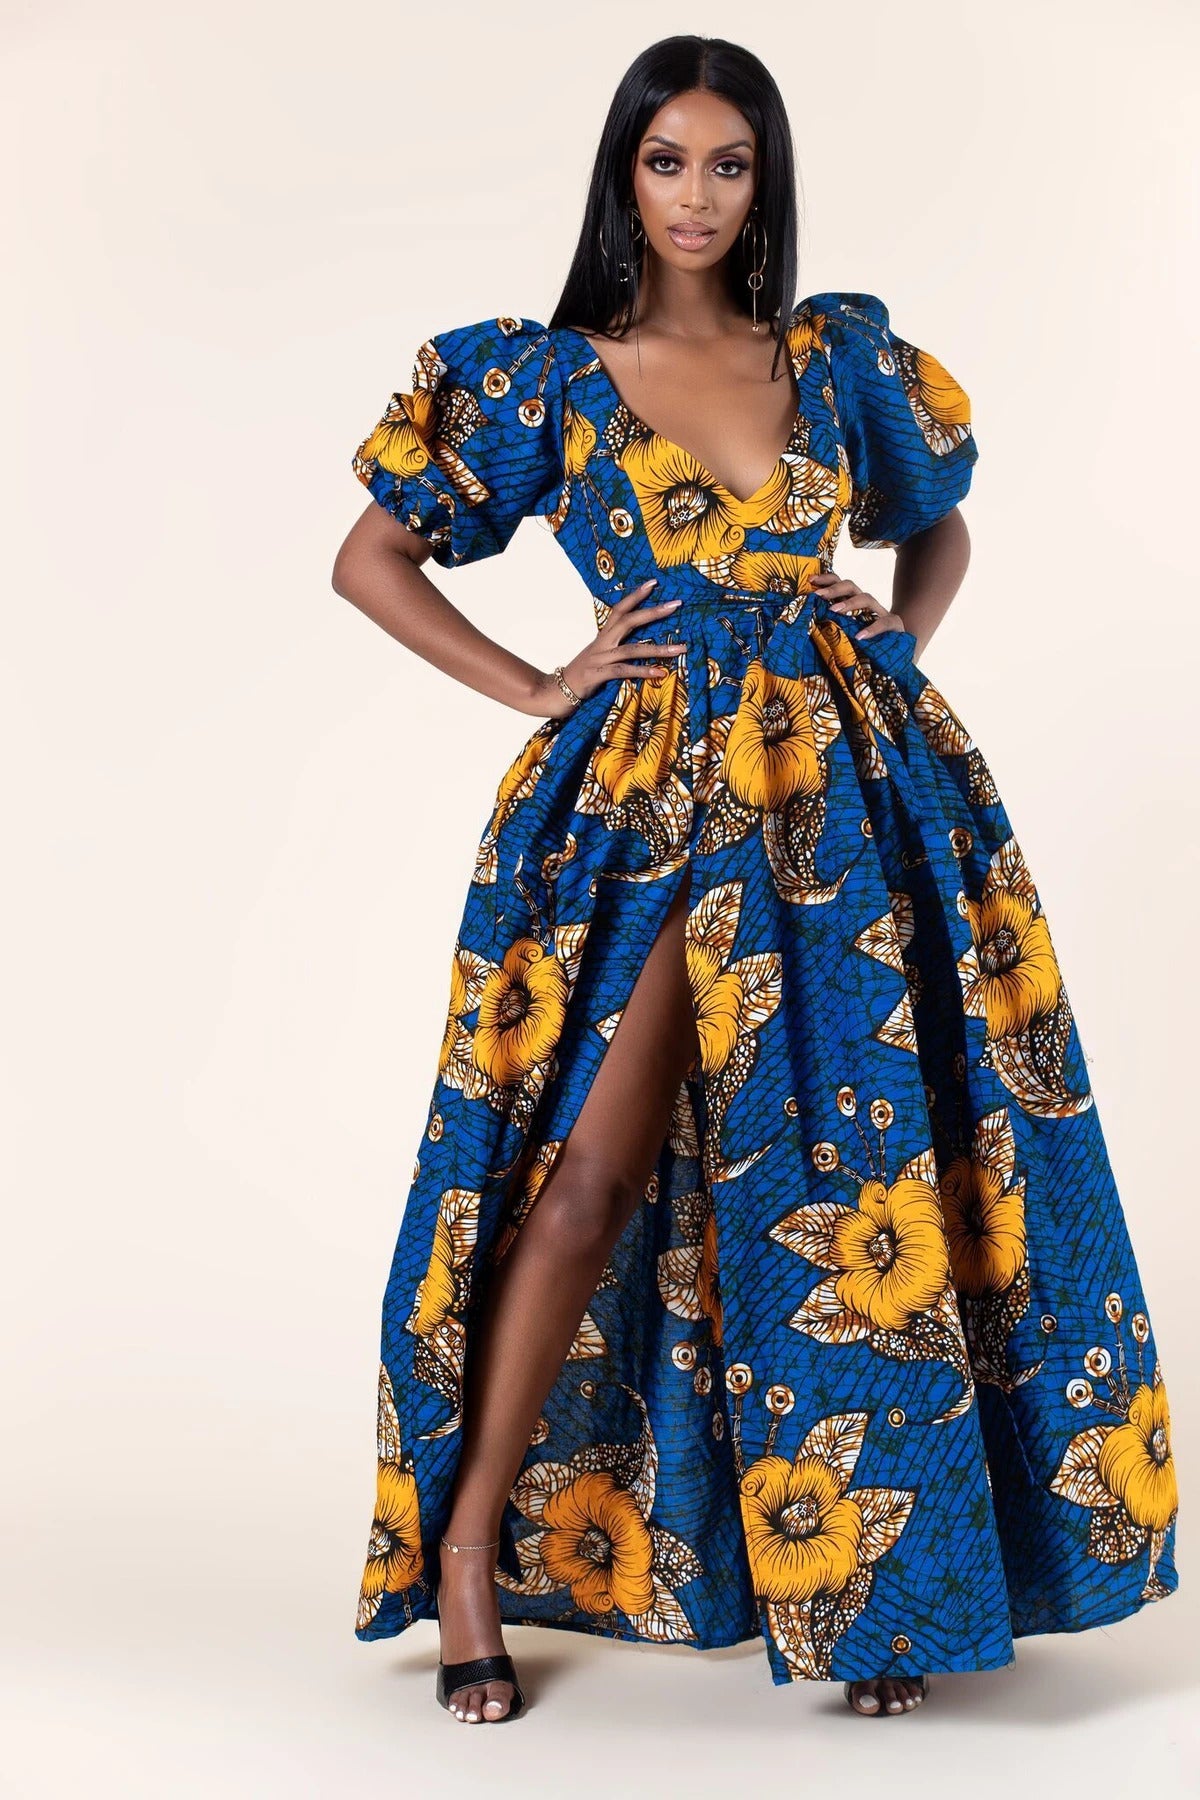 BLUE MUSTARD YELLOW AFRICAN ANKARA PRINT PLUS SIZE CLOTHING PARTY DRESS